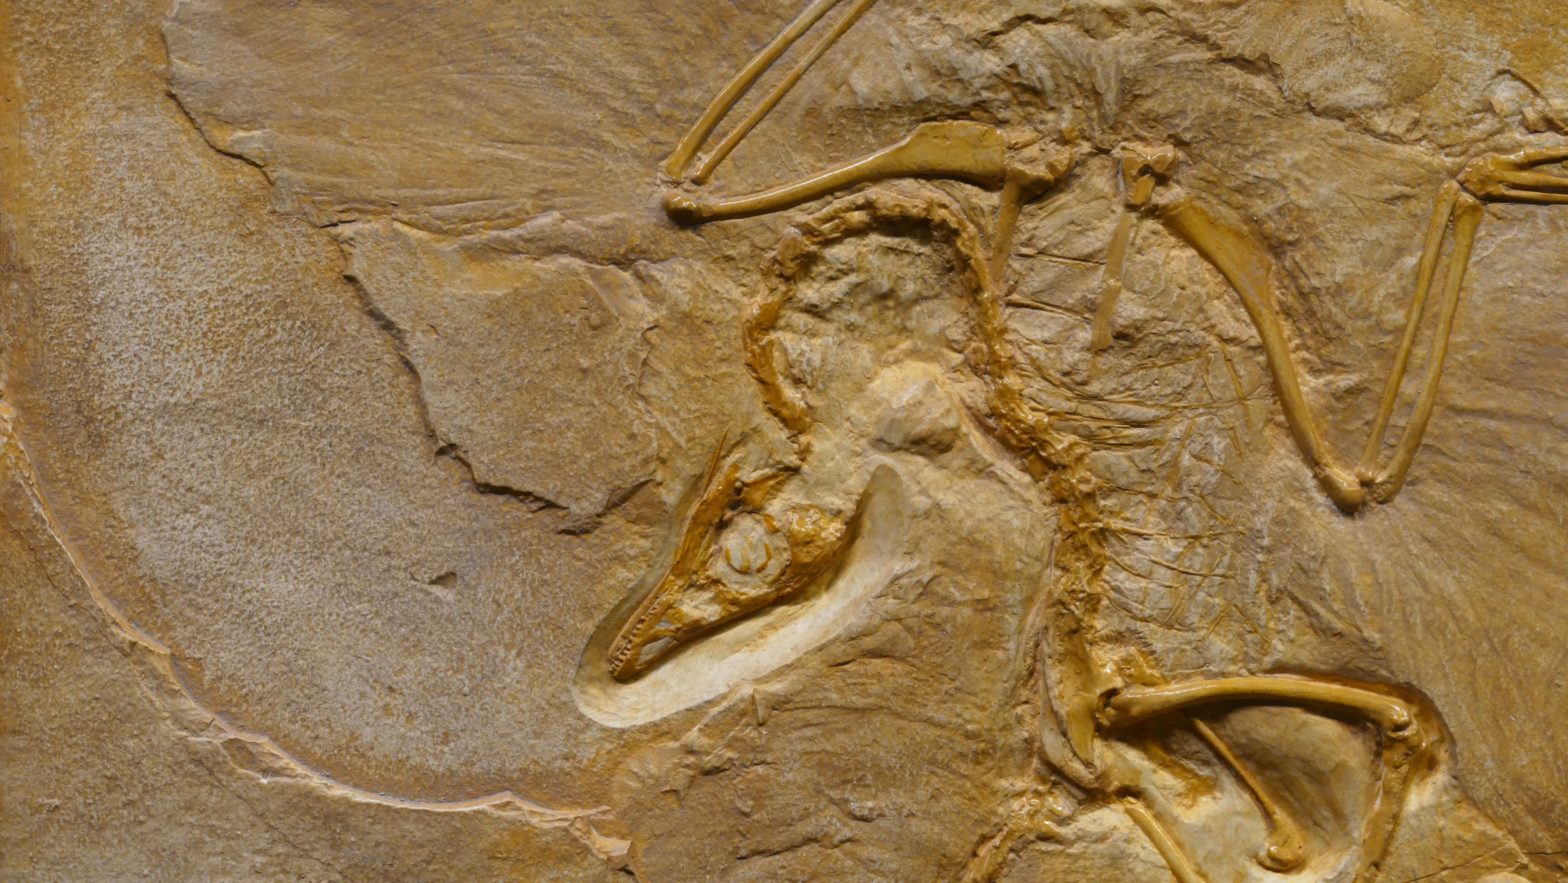 Africa's Oldest Known Dinosaur Has Been Found In Zimbabwe